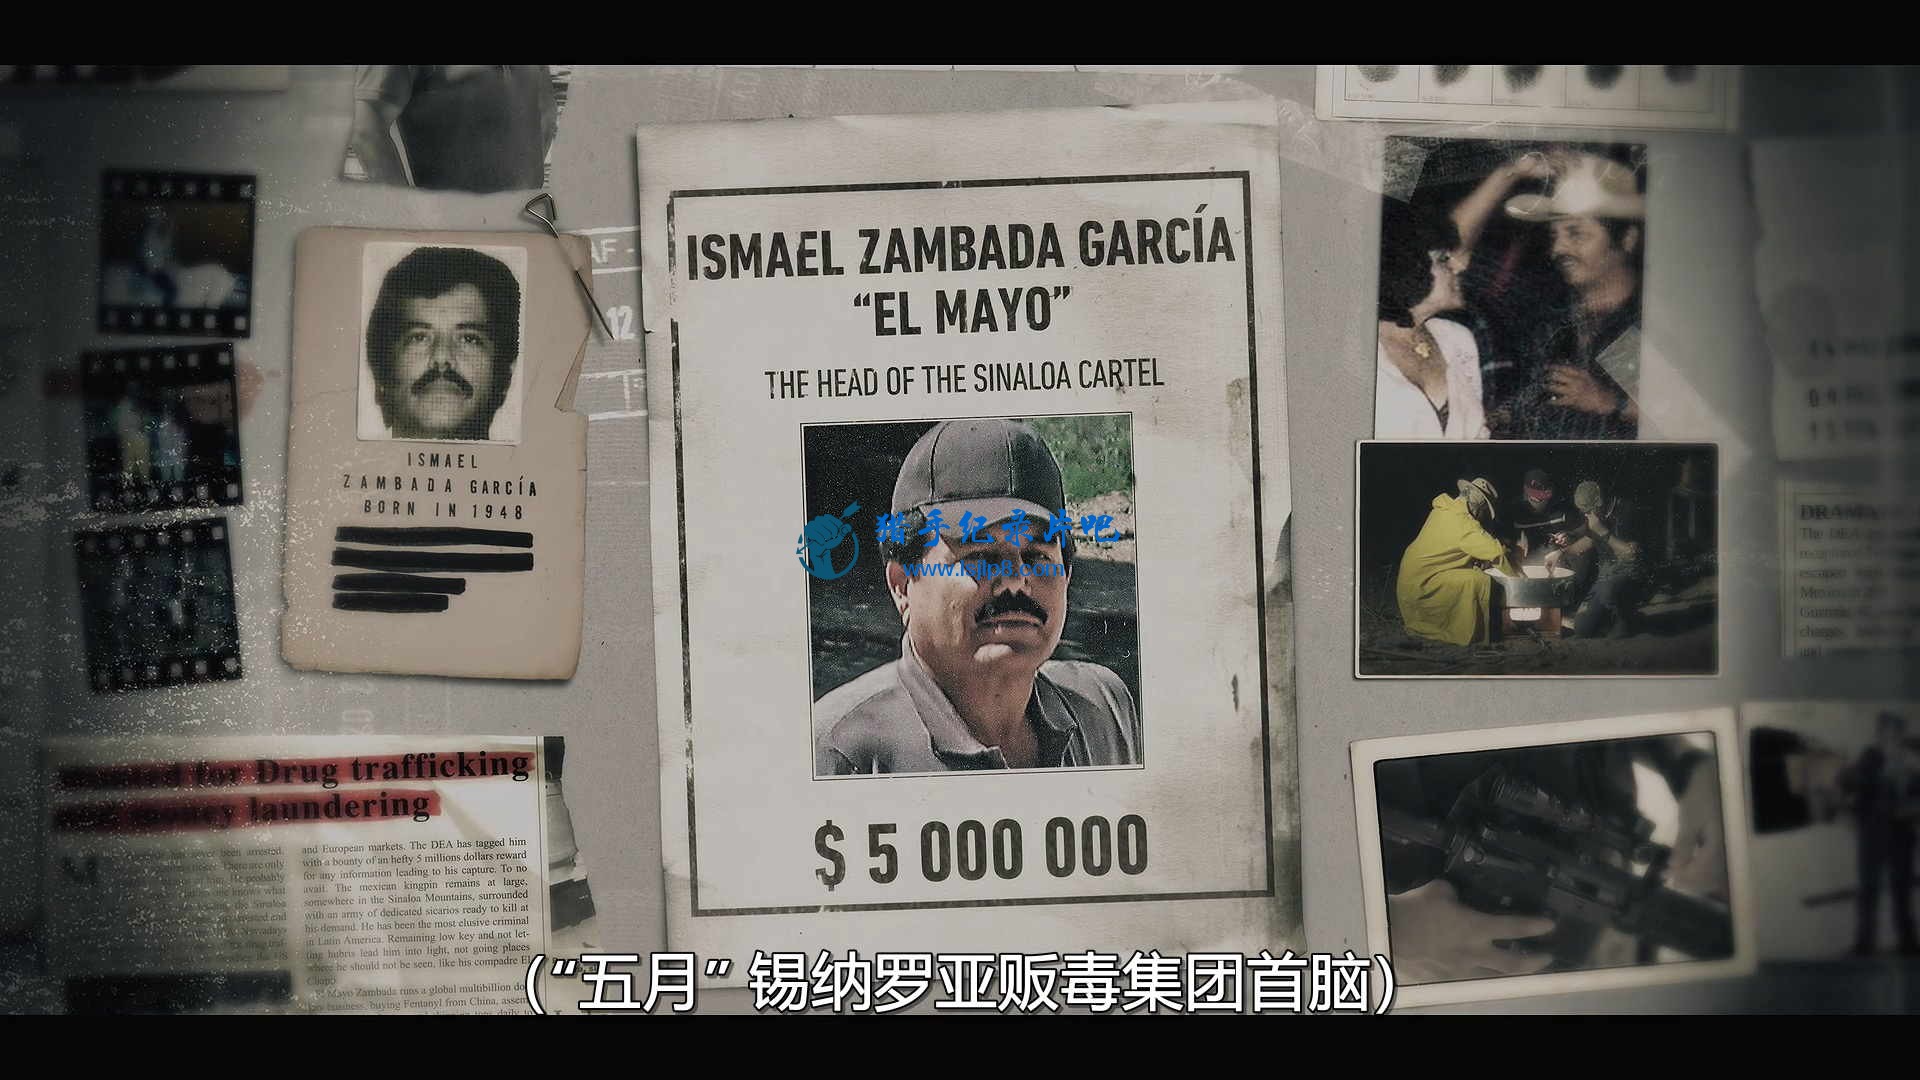 Worlds.Most.Wanted.S01E01.Ismael.El.Mayo.Zambada.Garcia.The.Head.of.the.Sinaloa..jpg